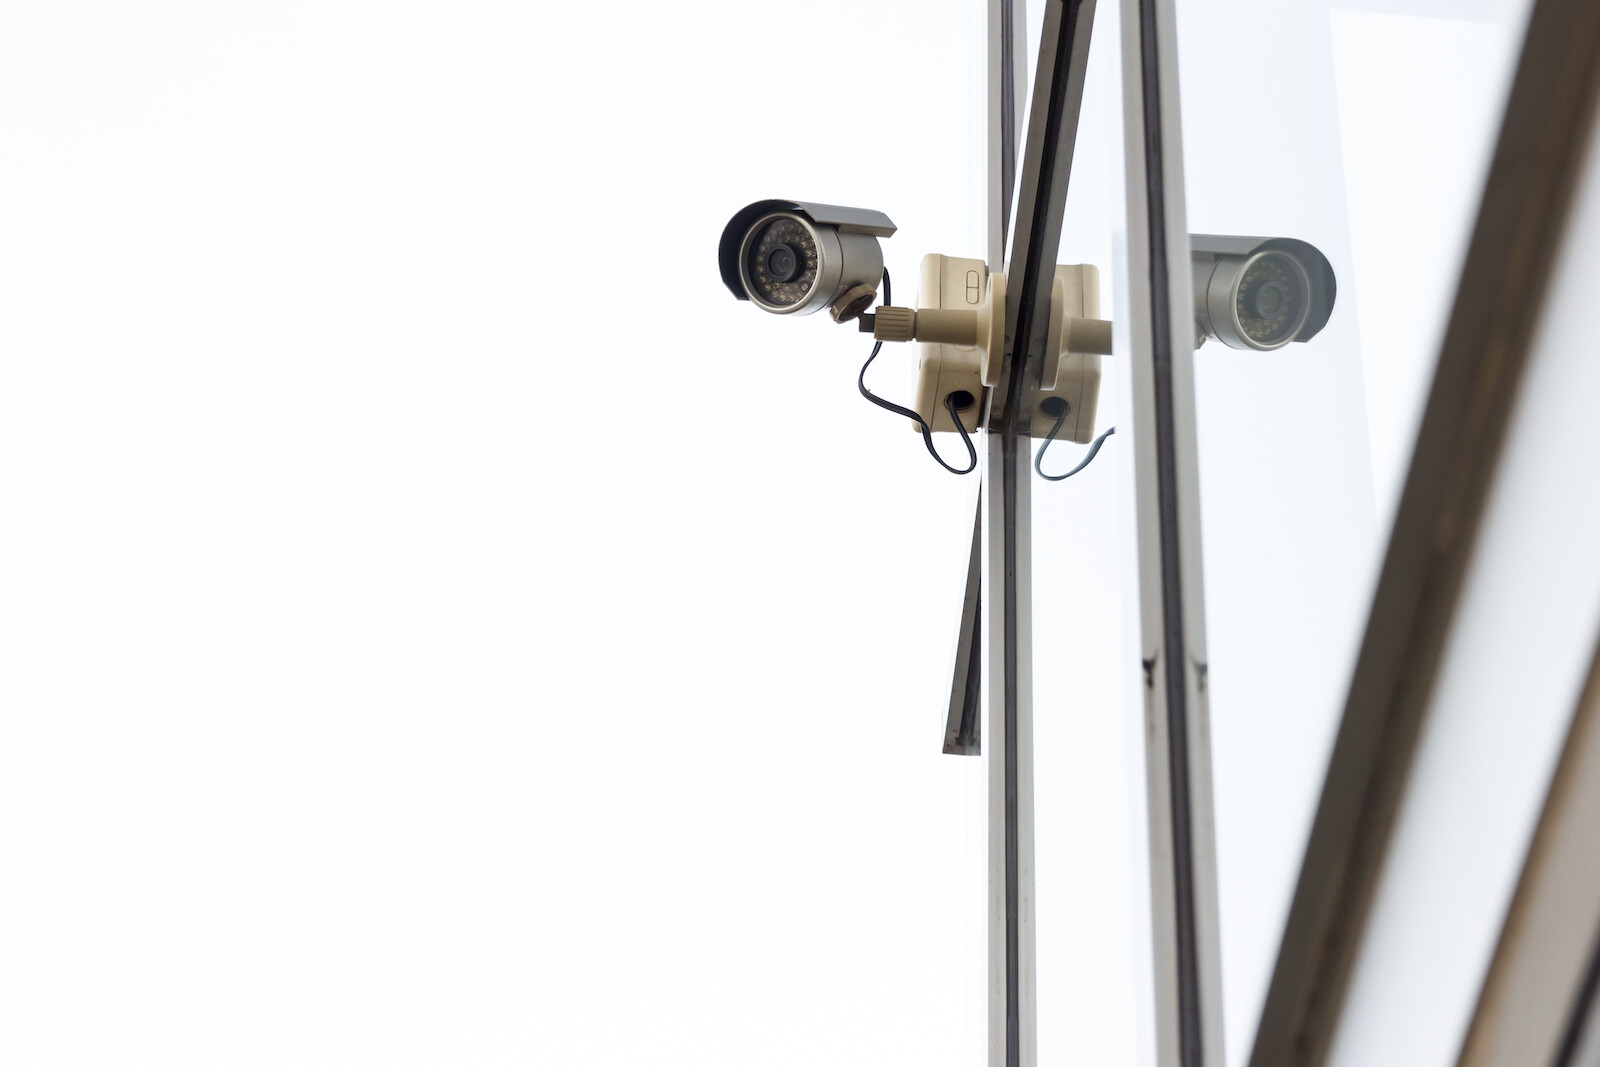 CCTV camera on white background